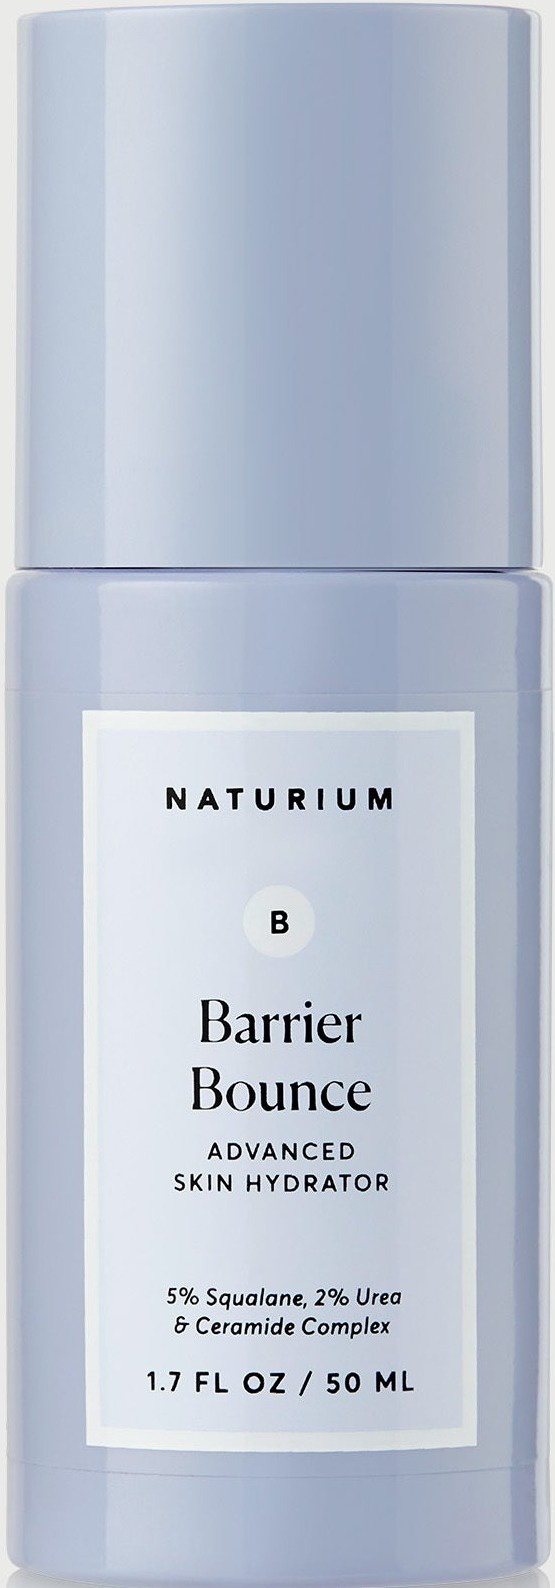 naturium Barrier Bounce